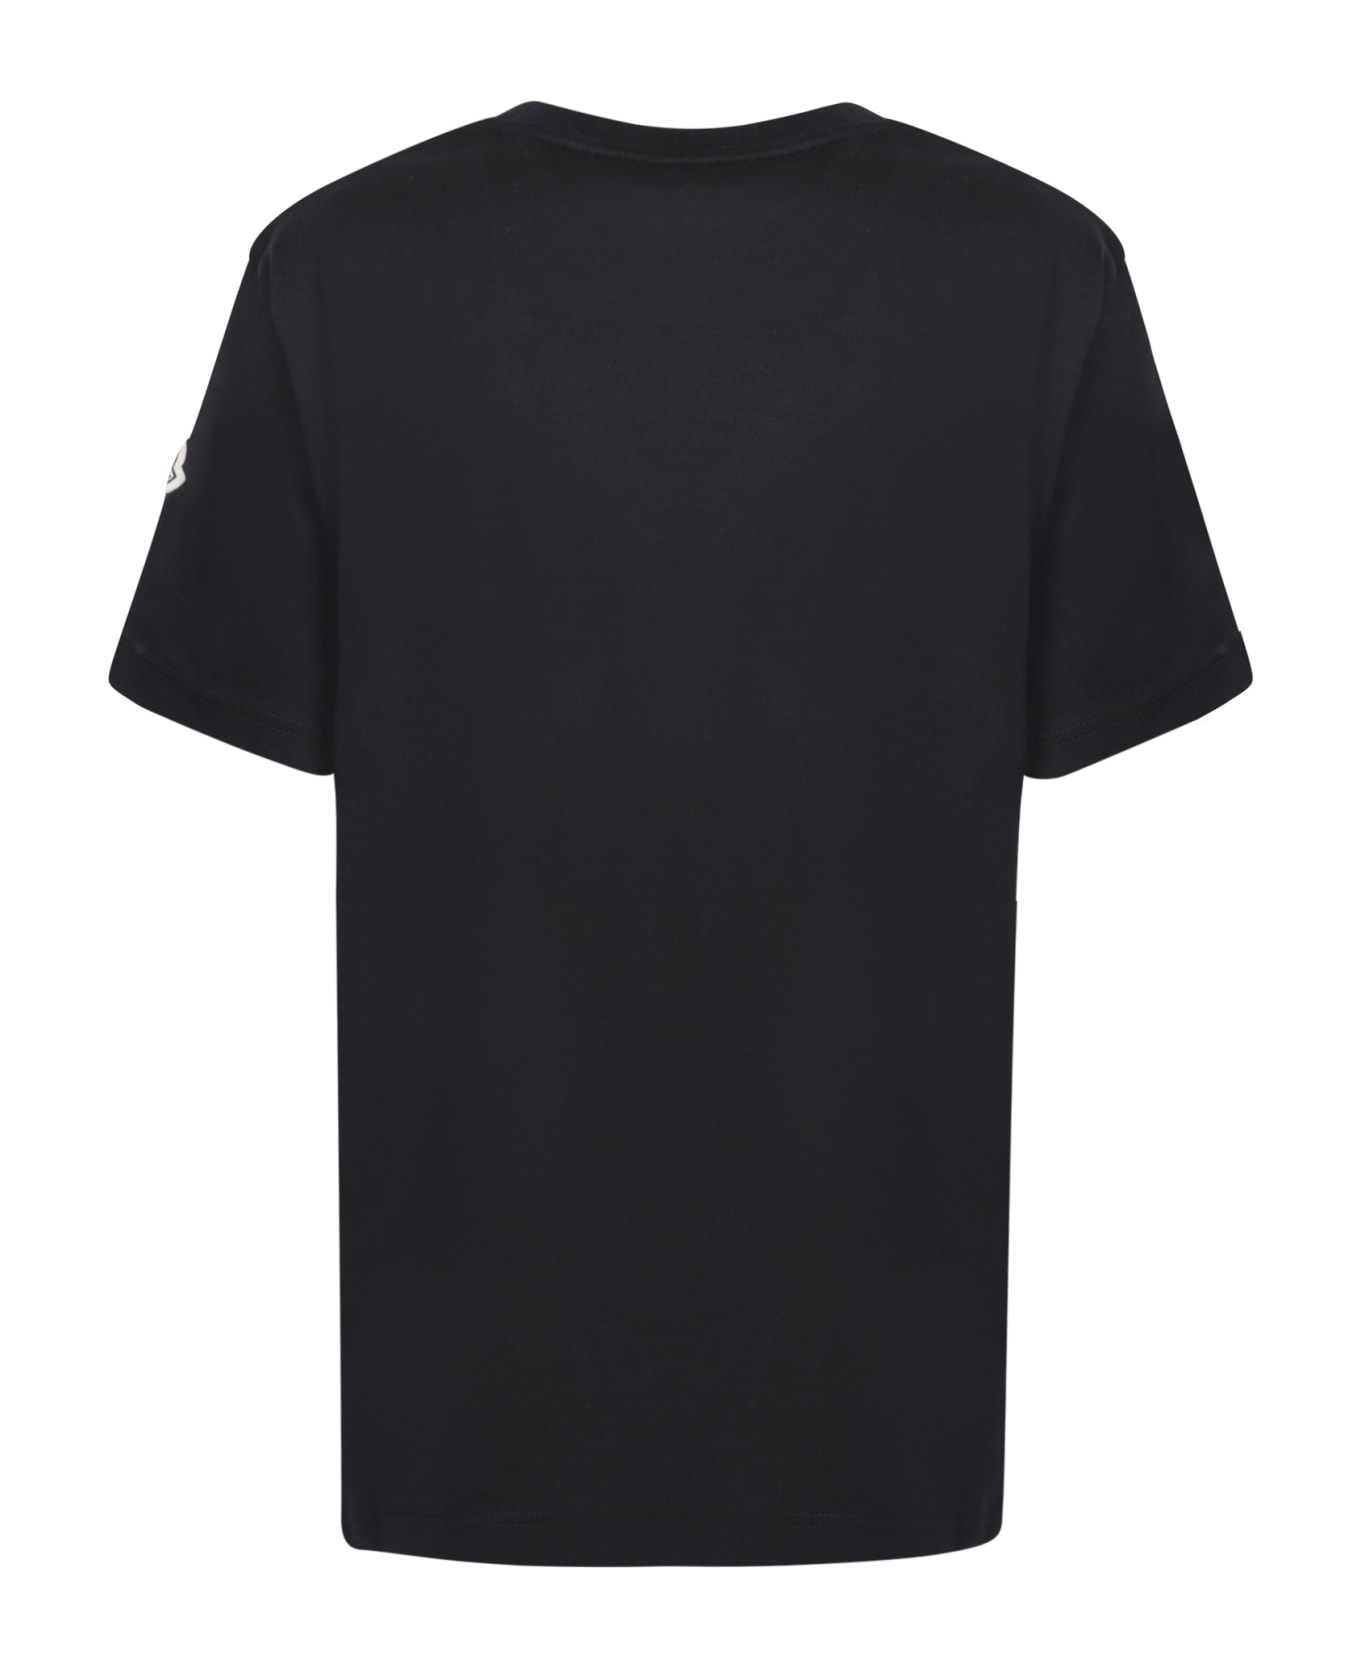 Moncler Sequin Logo T-shirt - Black Tシャツ